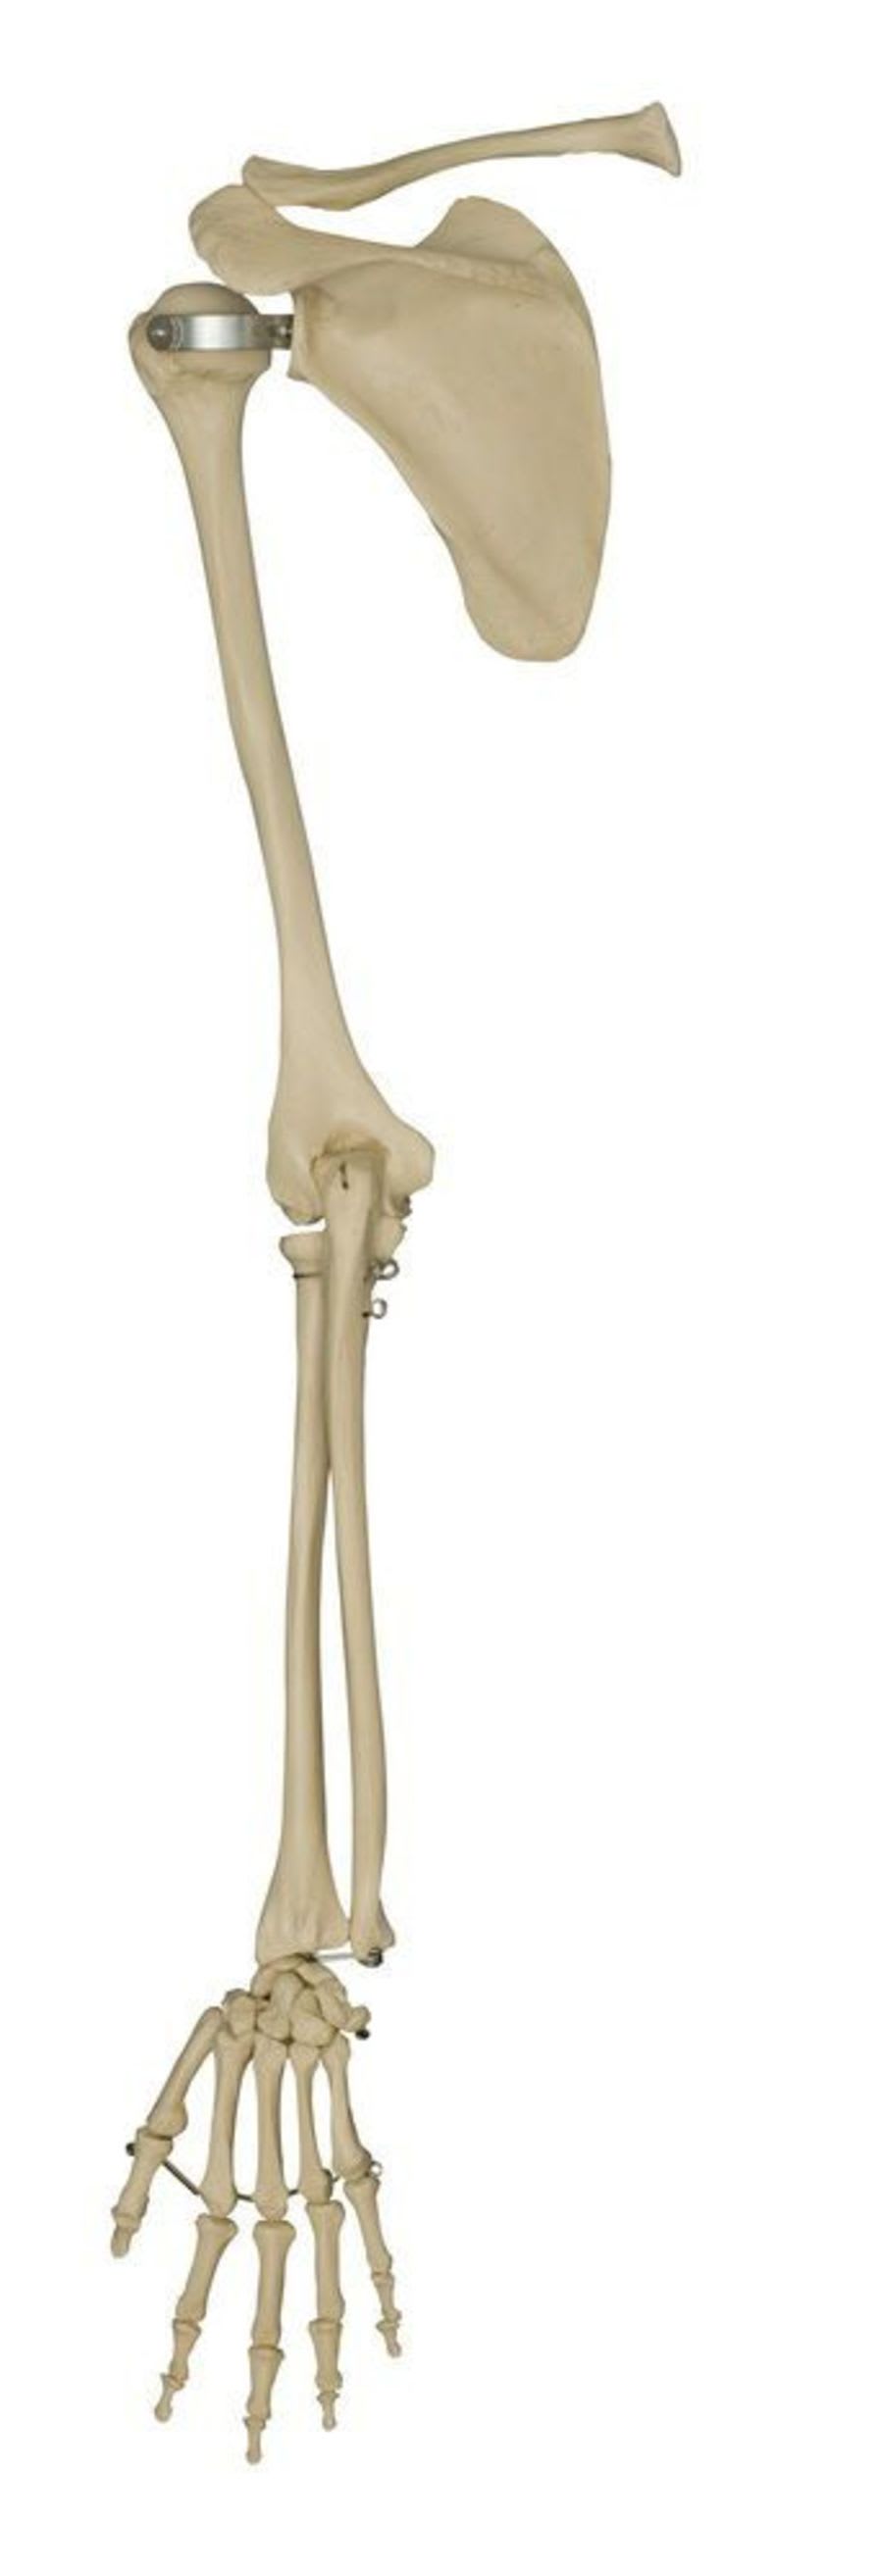 Skeleton anatomical model A230 RÜDIGER - ANATOMIE